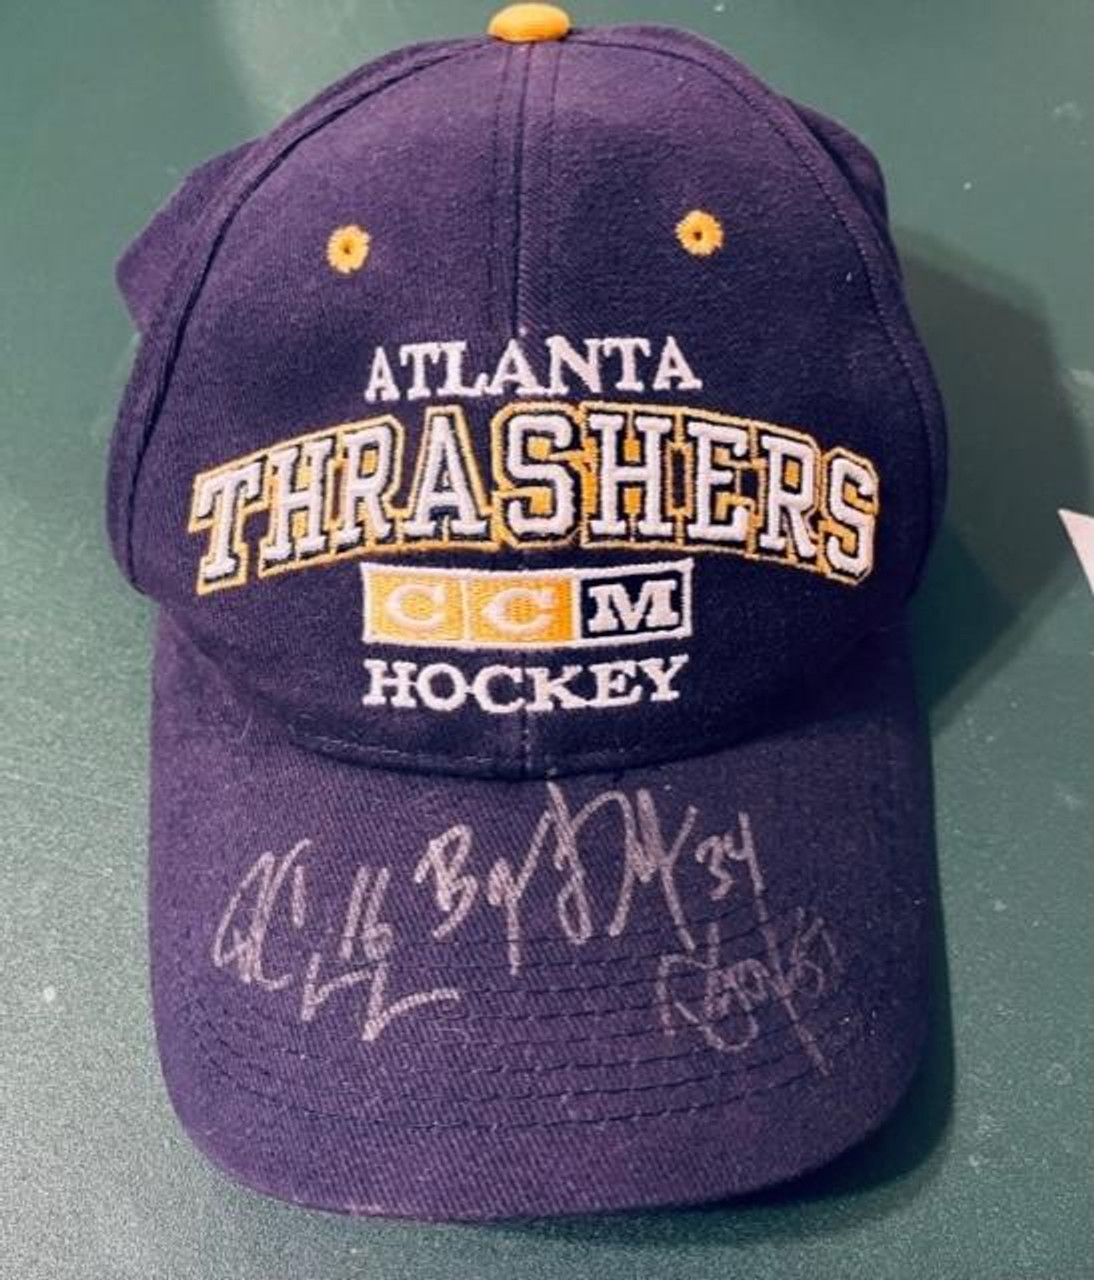 Atlanta Thrashers Jersey for sale